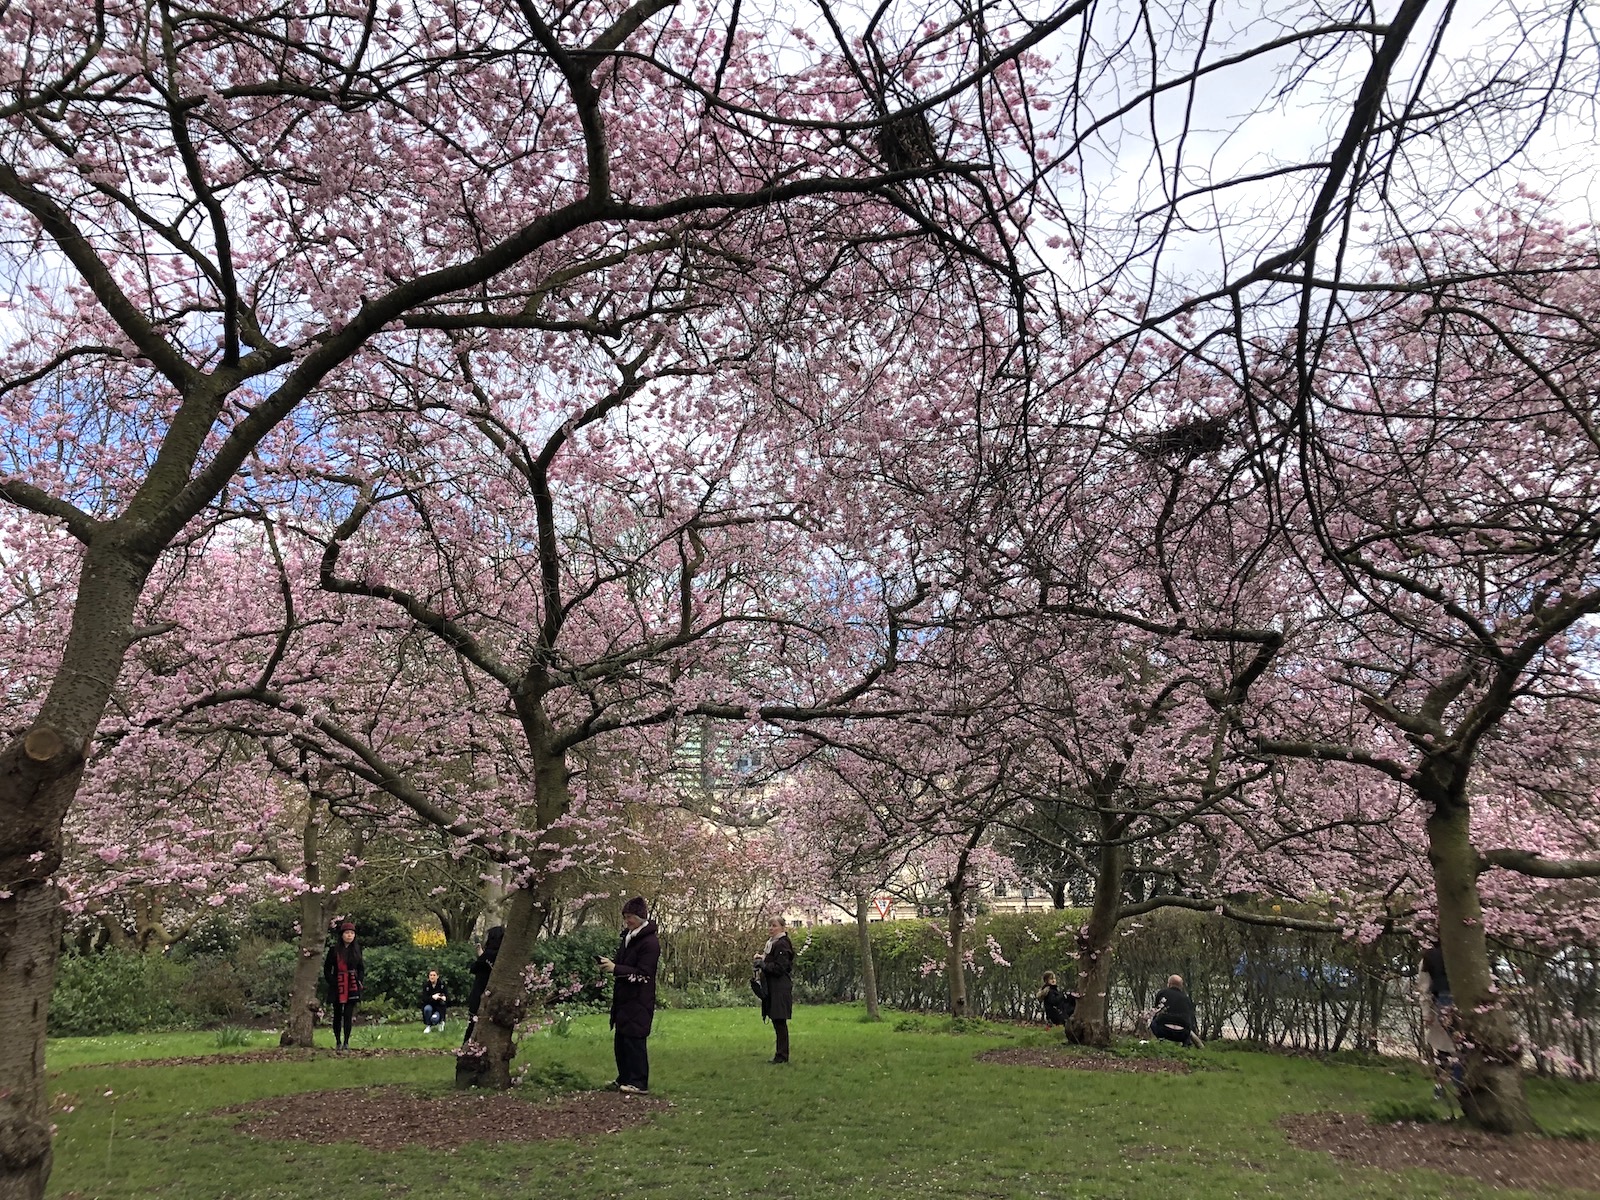 regents park cherry blossom